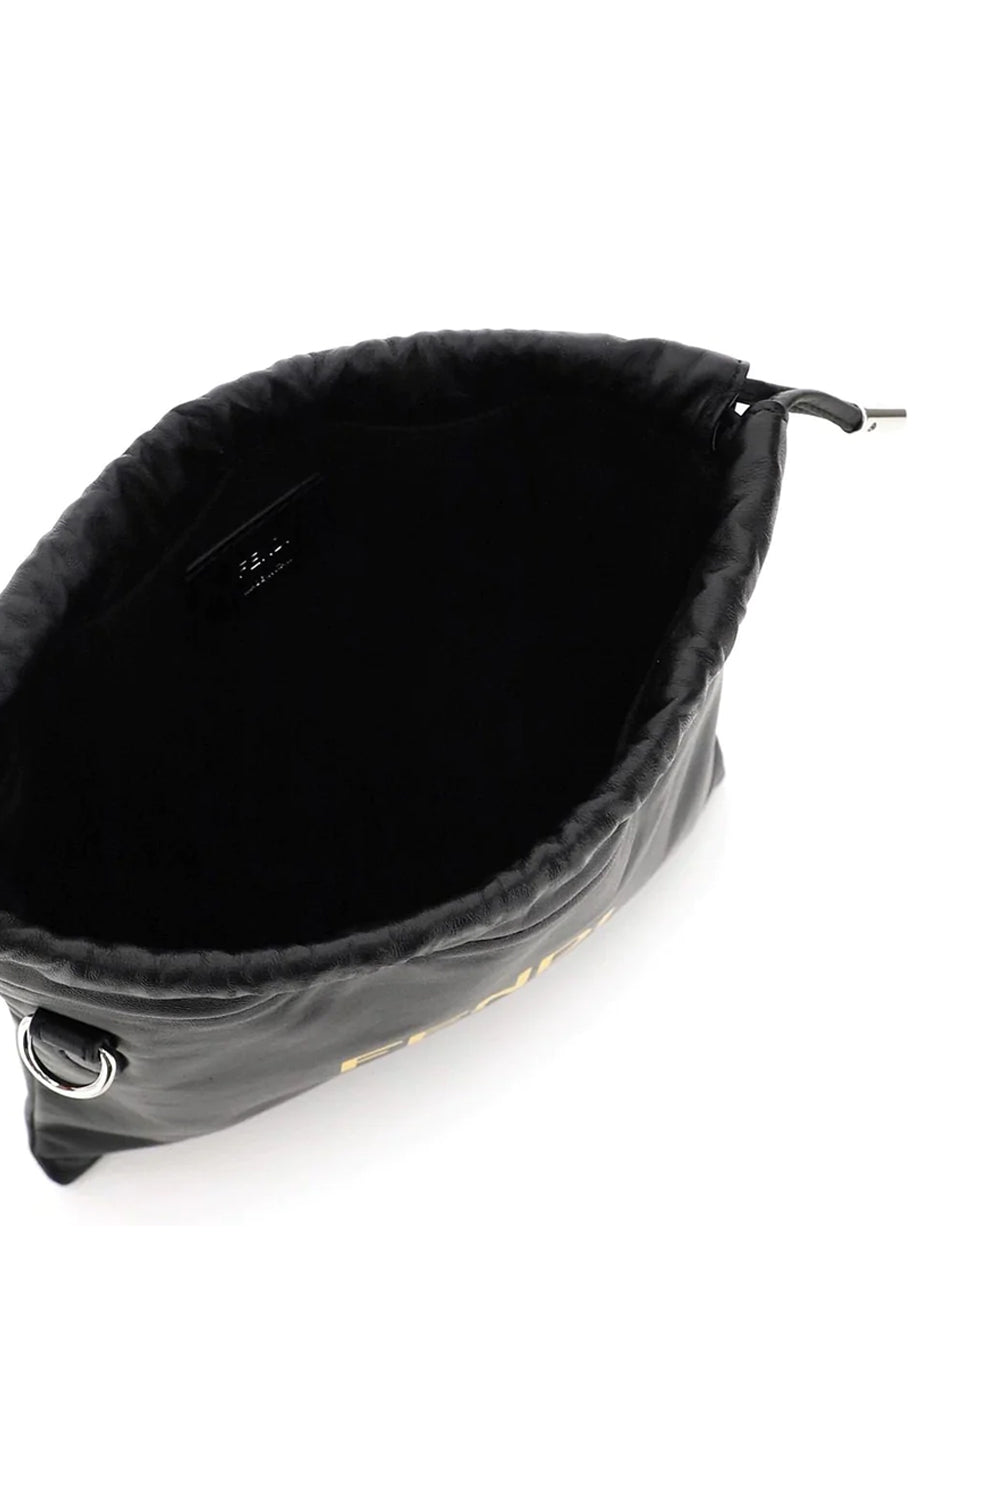 Fendi Roma Black Leather Drawstring Mini Crossbody Bag